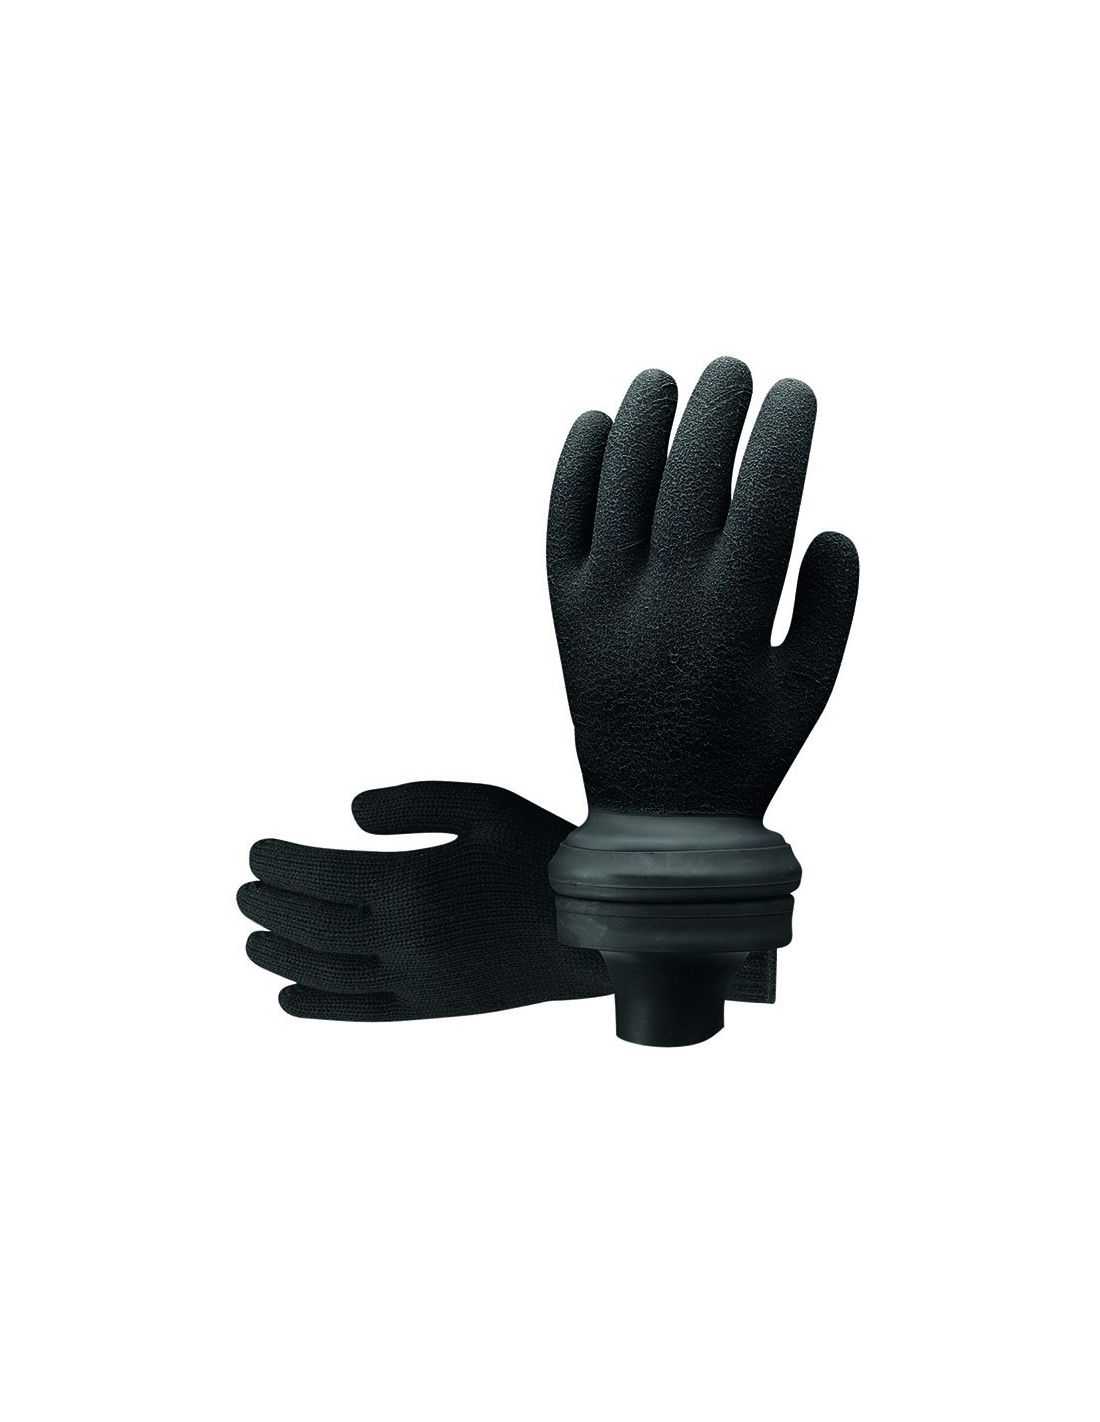 Scubapro Seamless 1.5mm Gloves